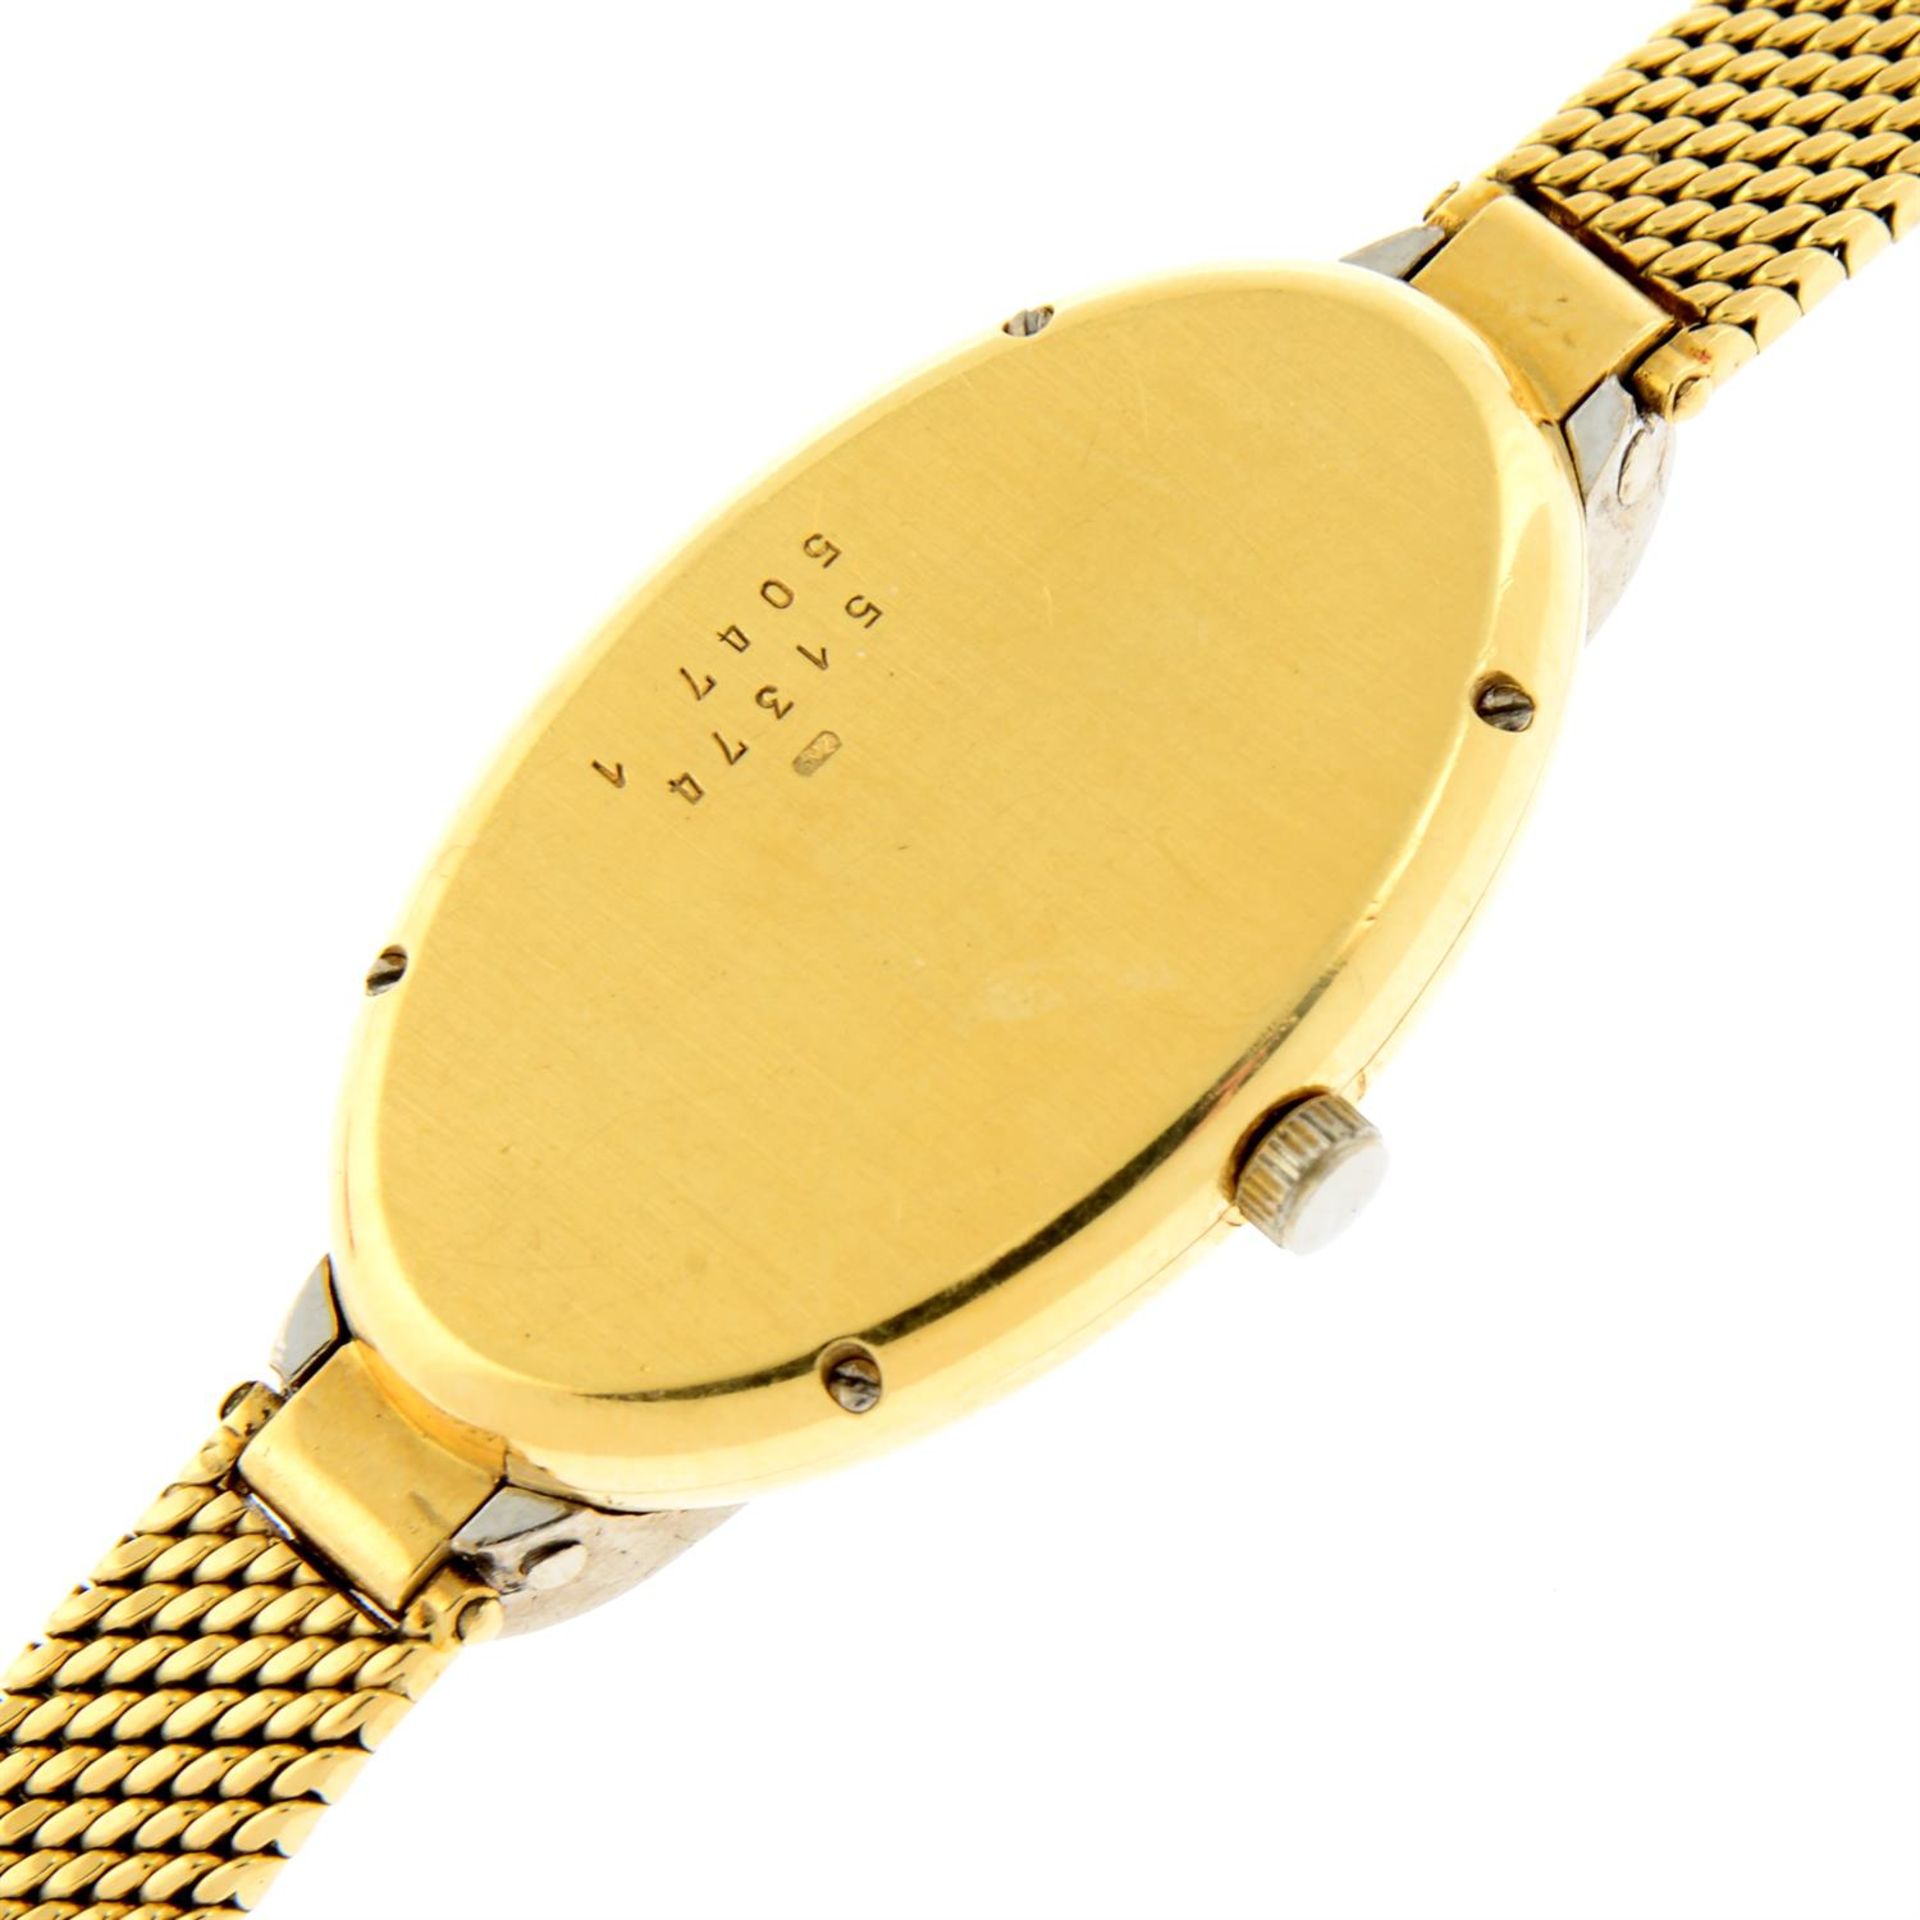 CHOPARD - a yellow metal diamond set bracelet watch, 22mm. - Image 4 of 5